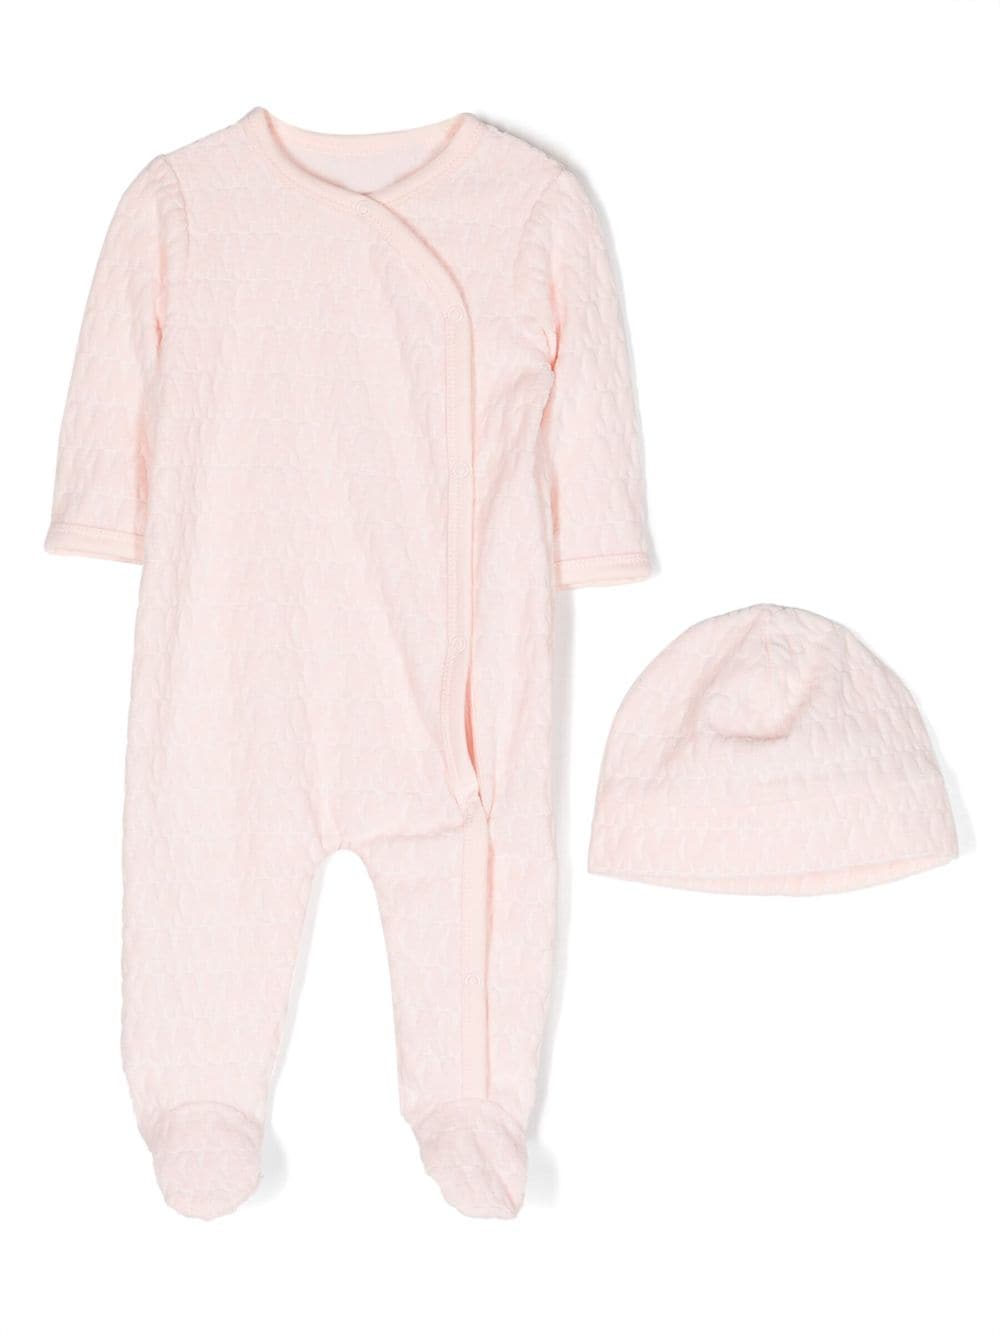 Michael Kors Kids textured pyjamas set - Pink